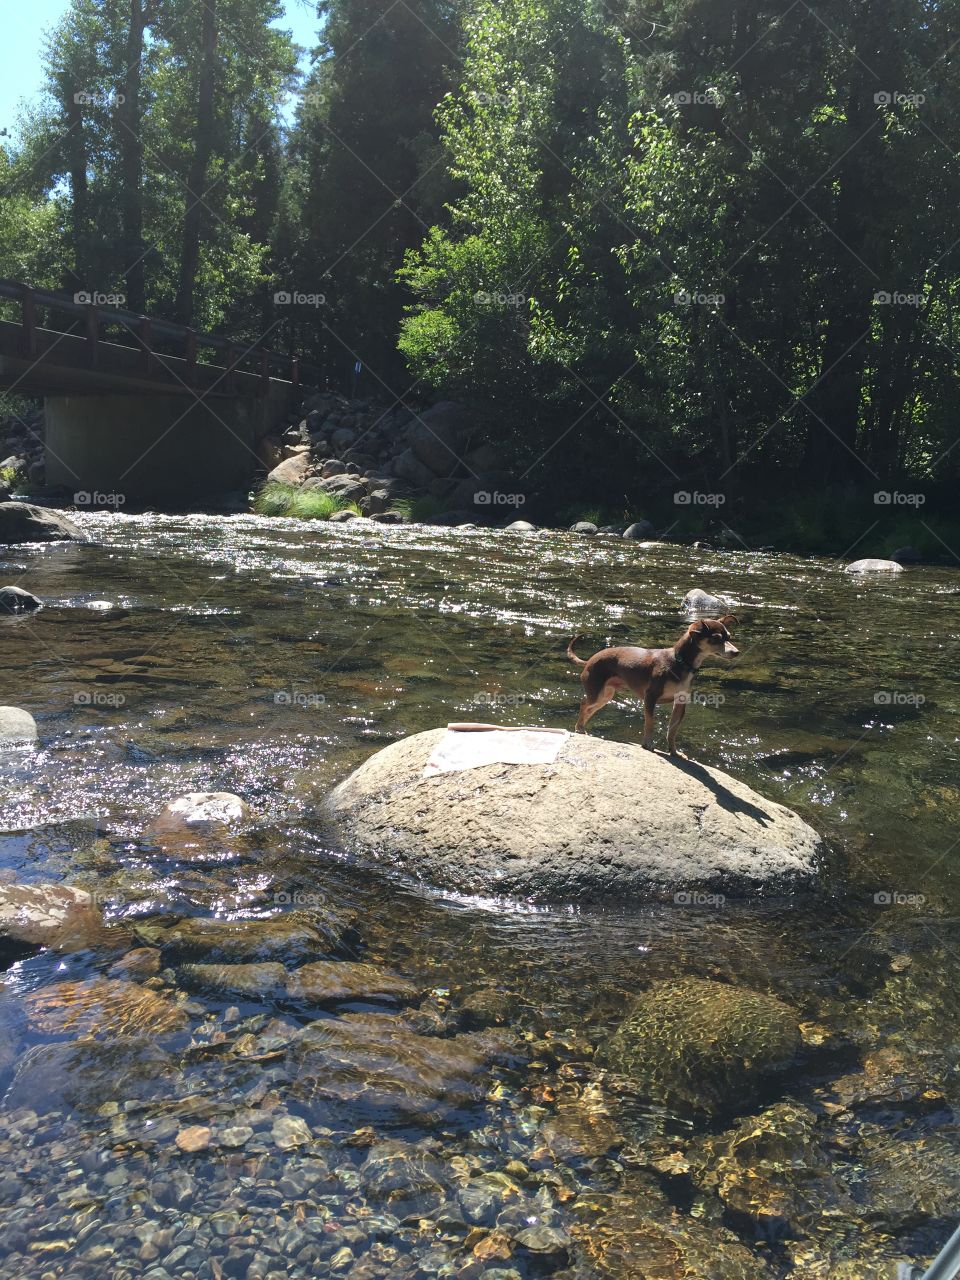 Creek, creek fun, water, dog, dog on rock, dig in creek, dog and water, summer, summer time